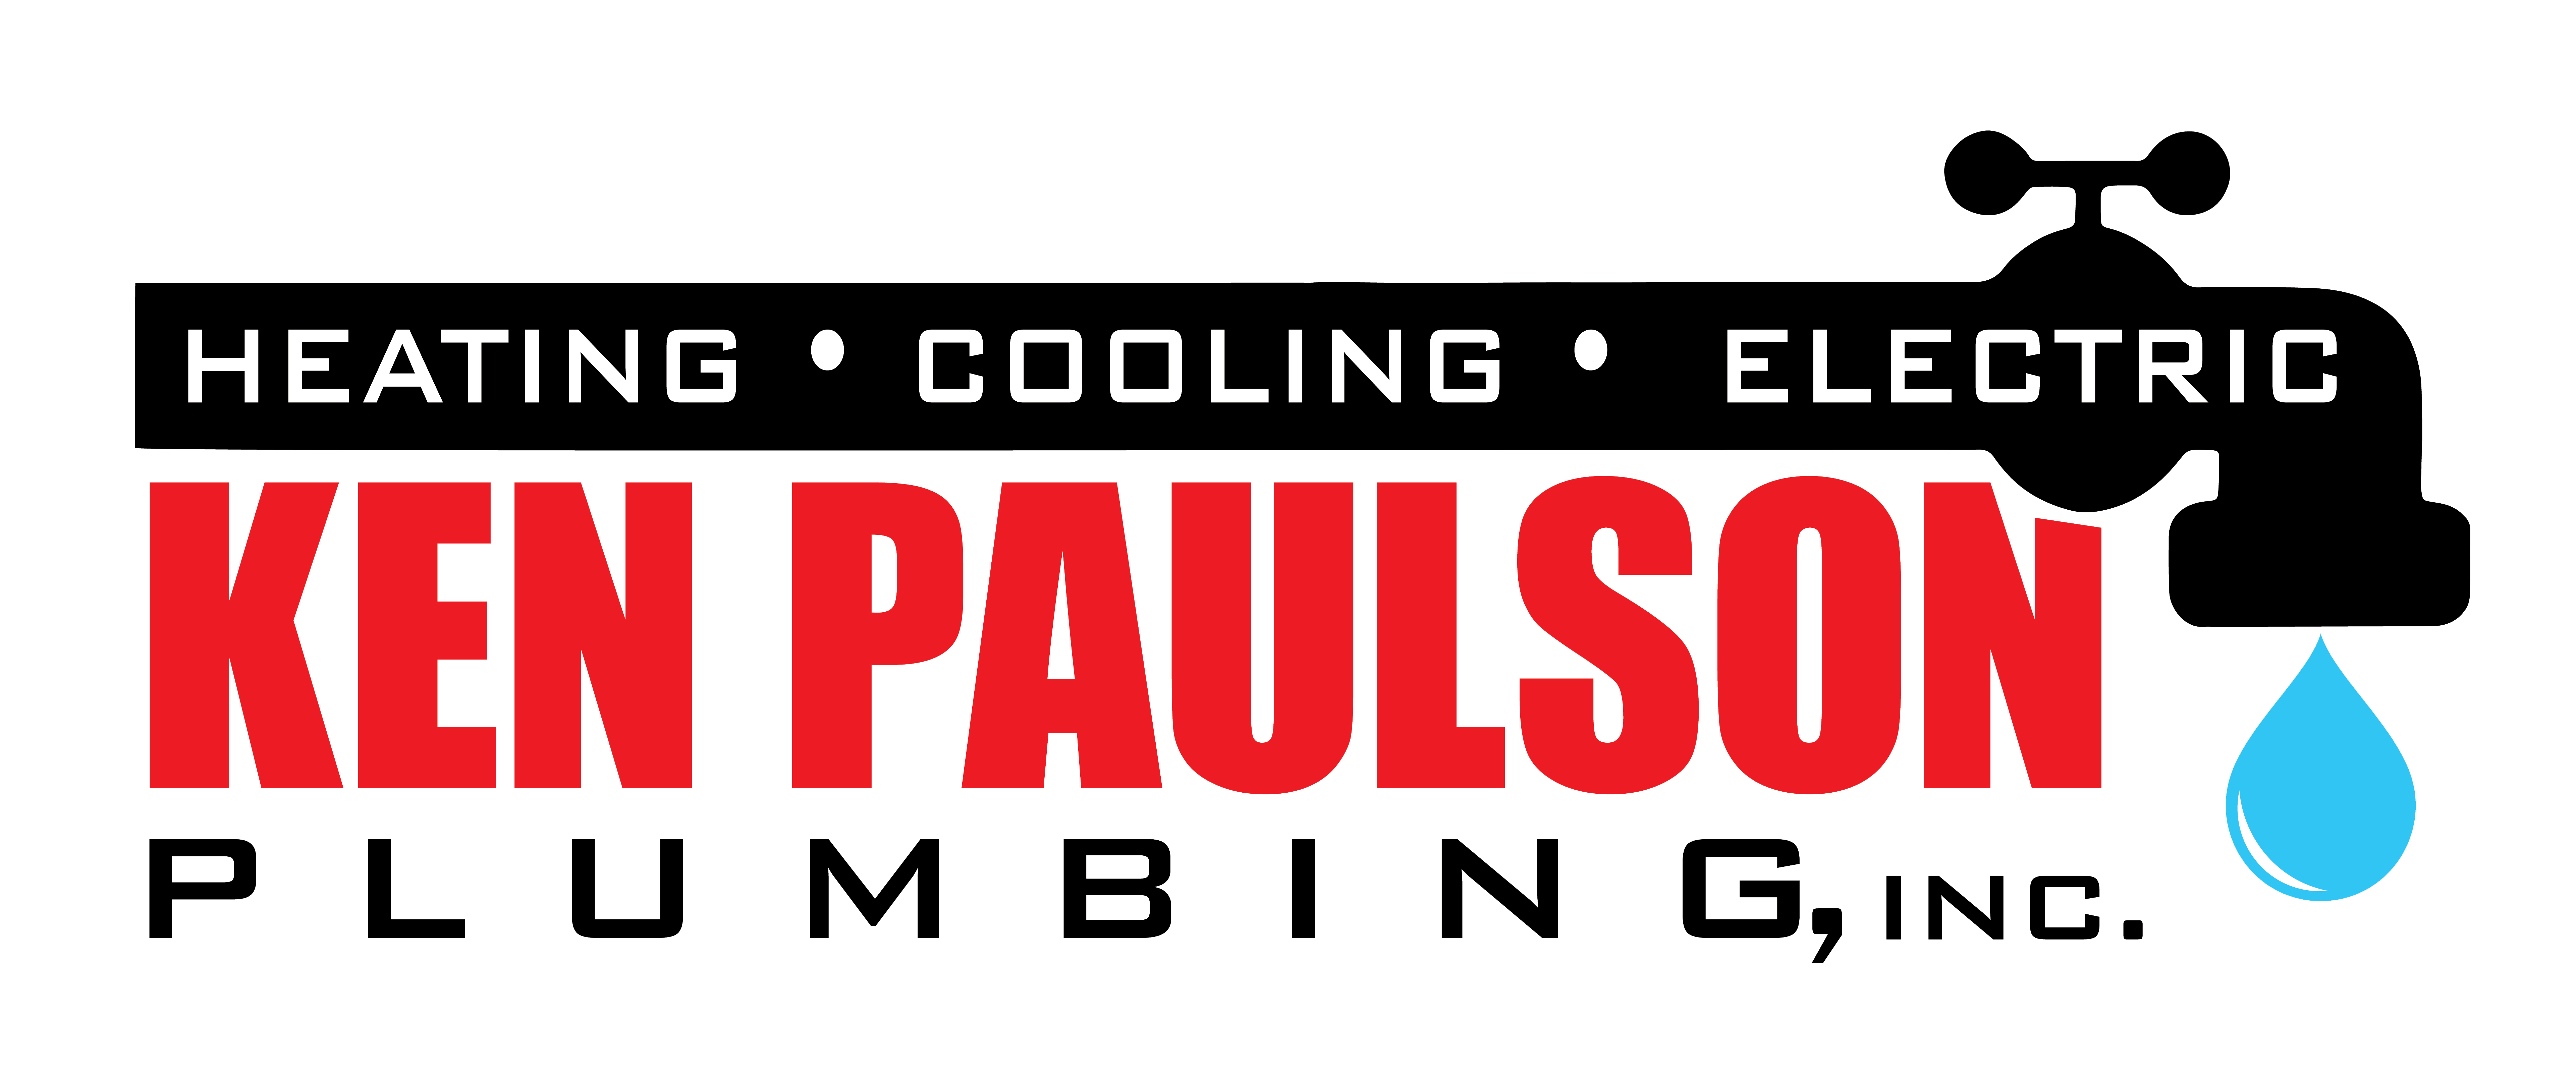 Ken Paulson Plumbing, Inc.